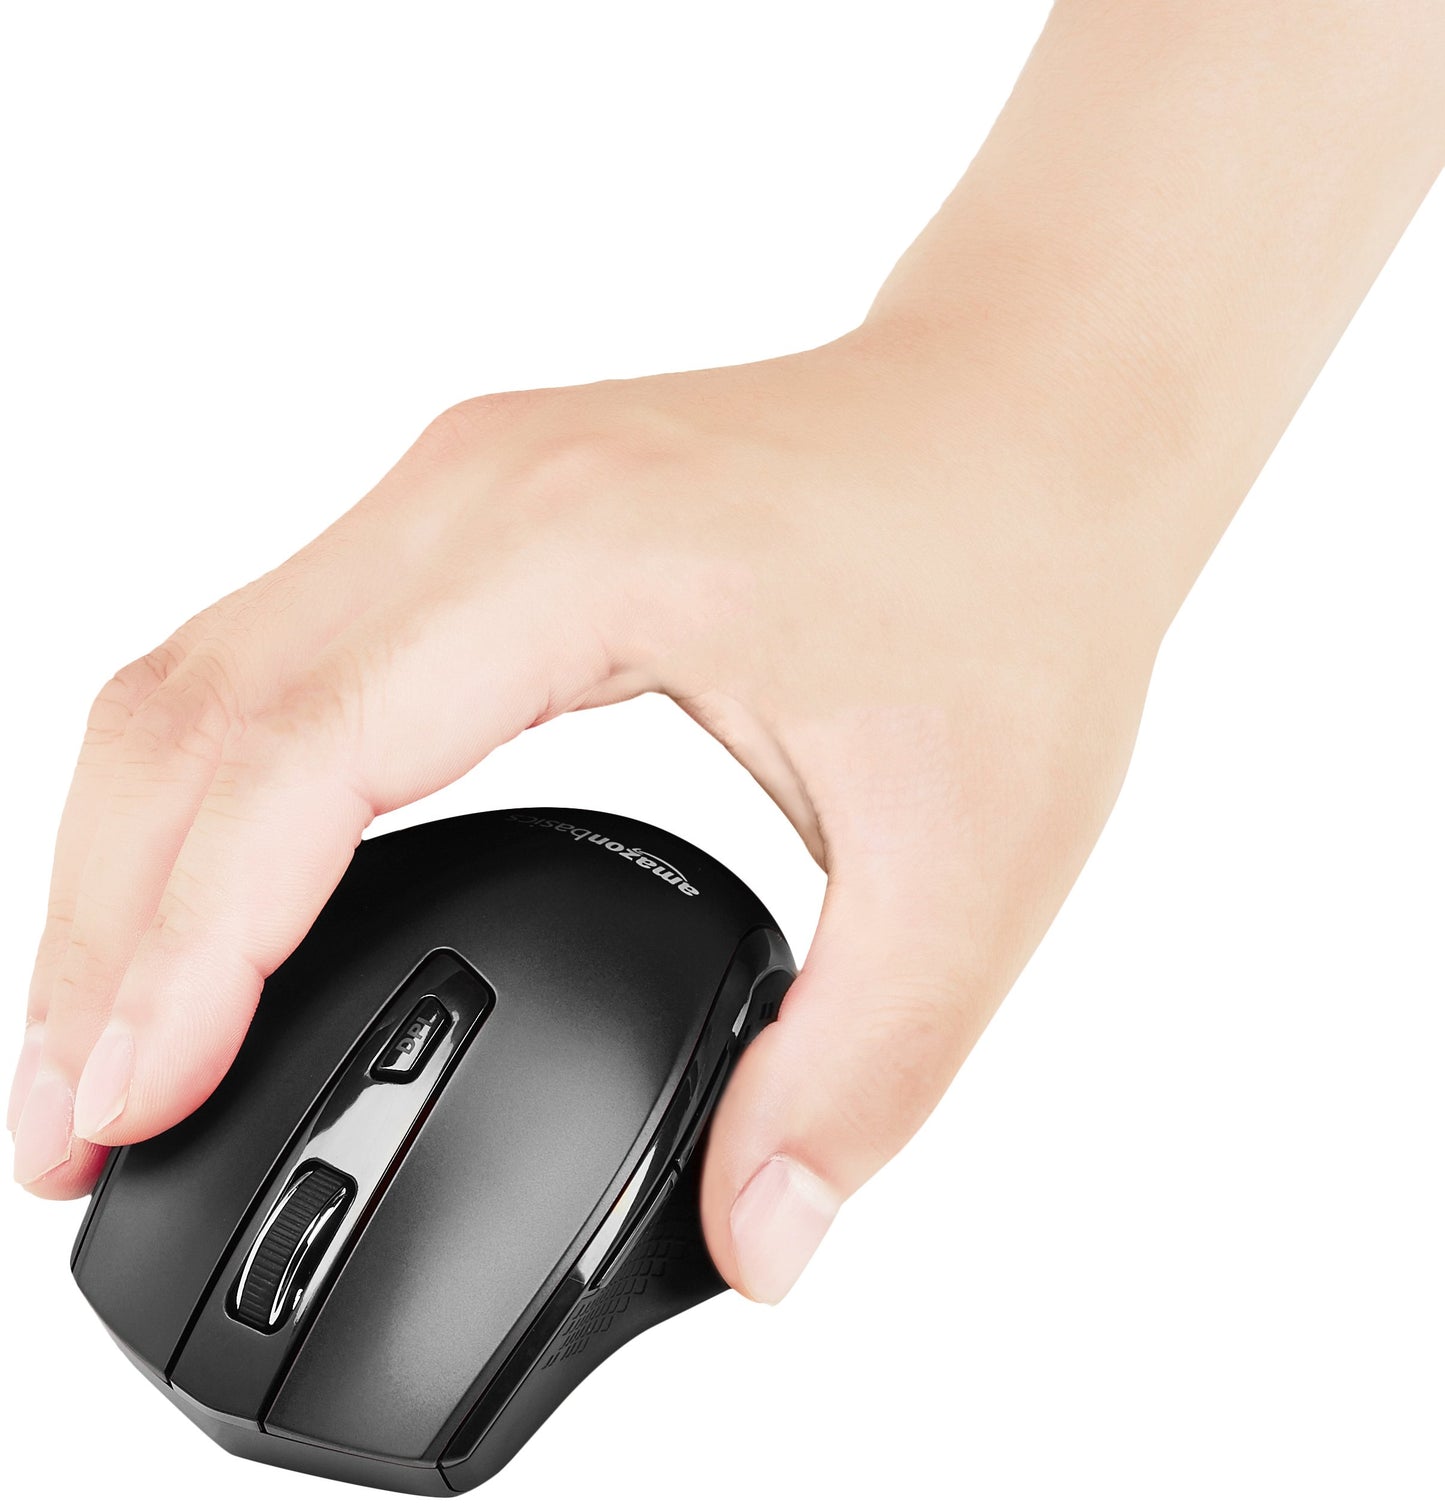 Amazon Basics Ergonomic 2.4 GHz Wireless Optical Mouse, DPI adjustable, Compatible with PC, Mac, Laptop - Black